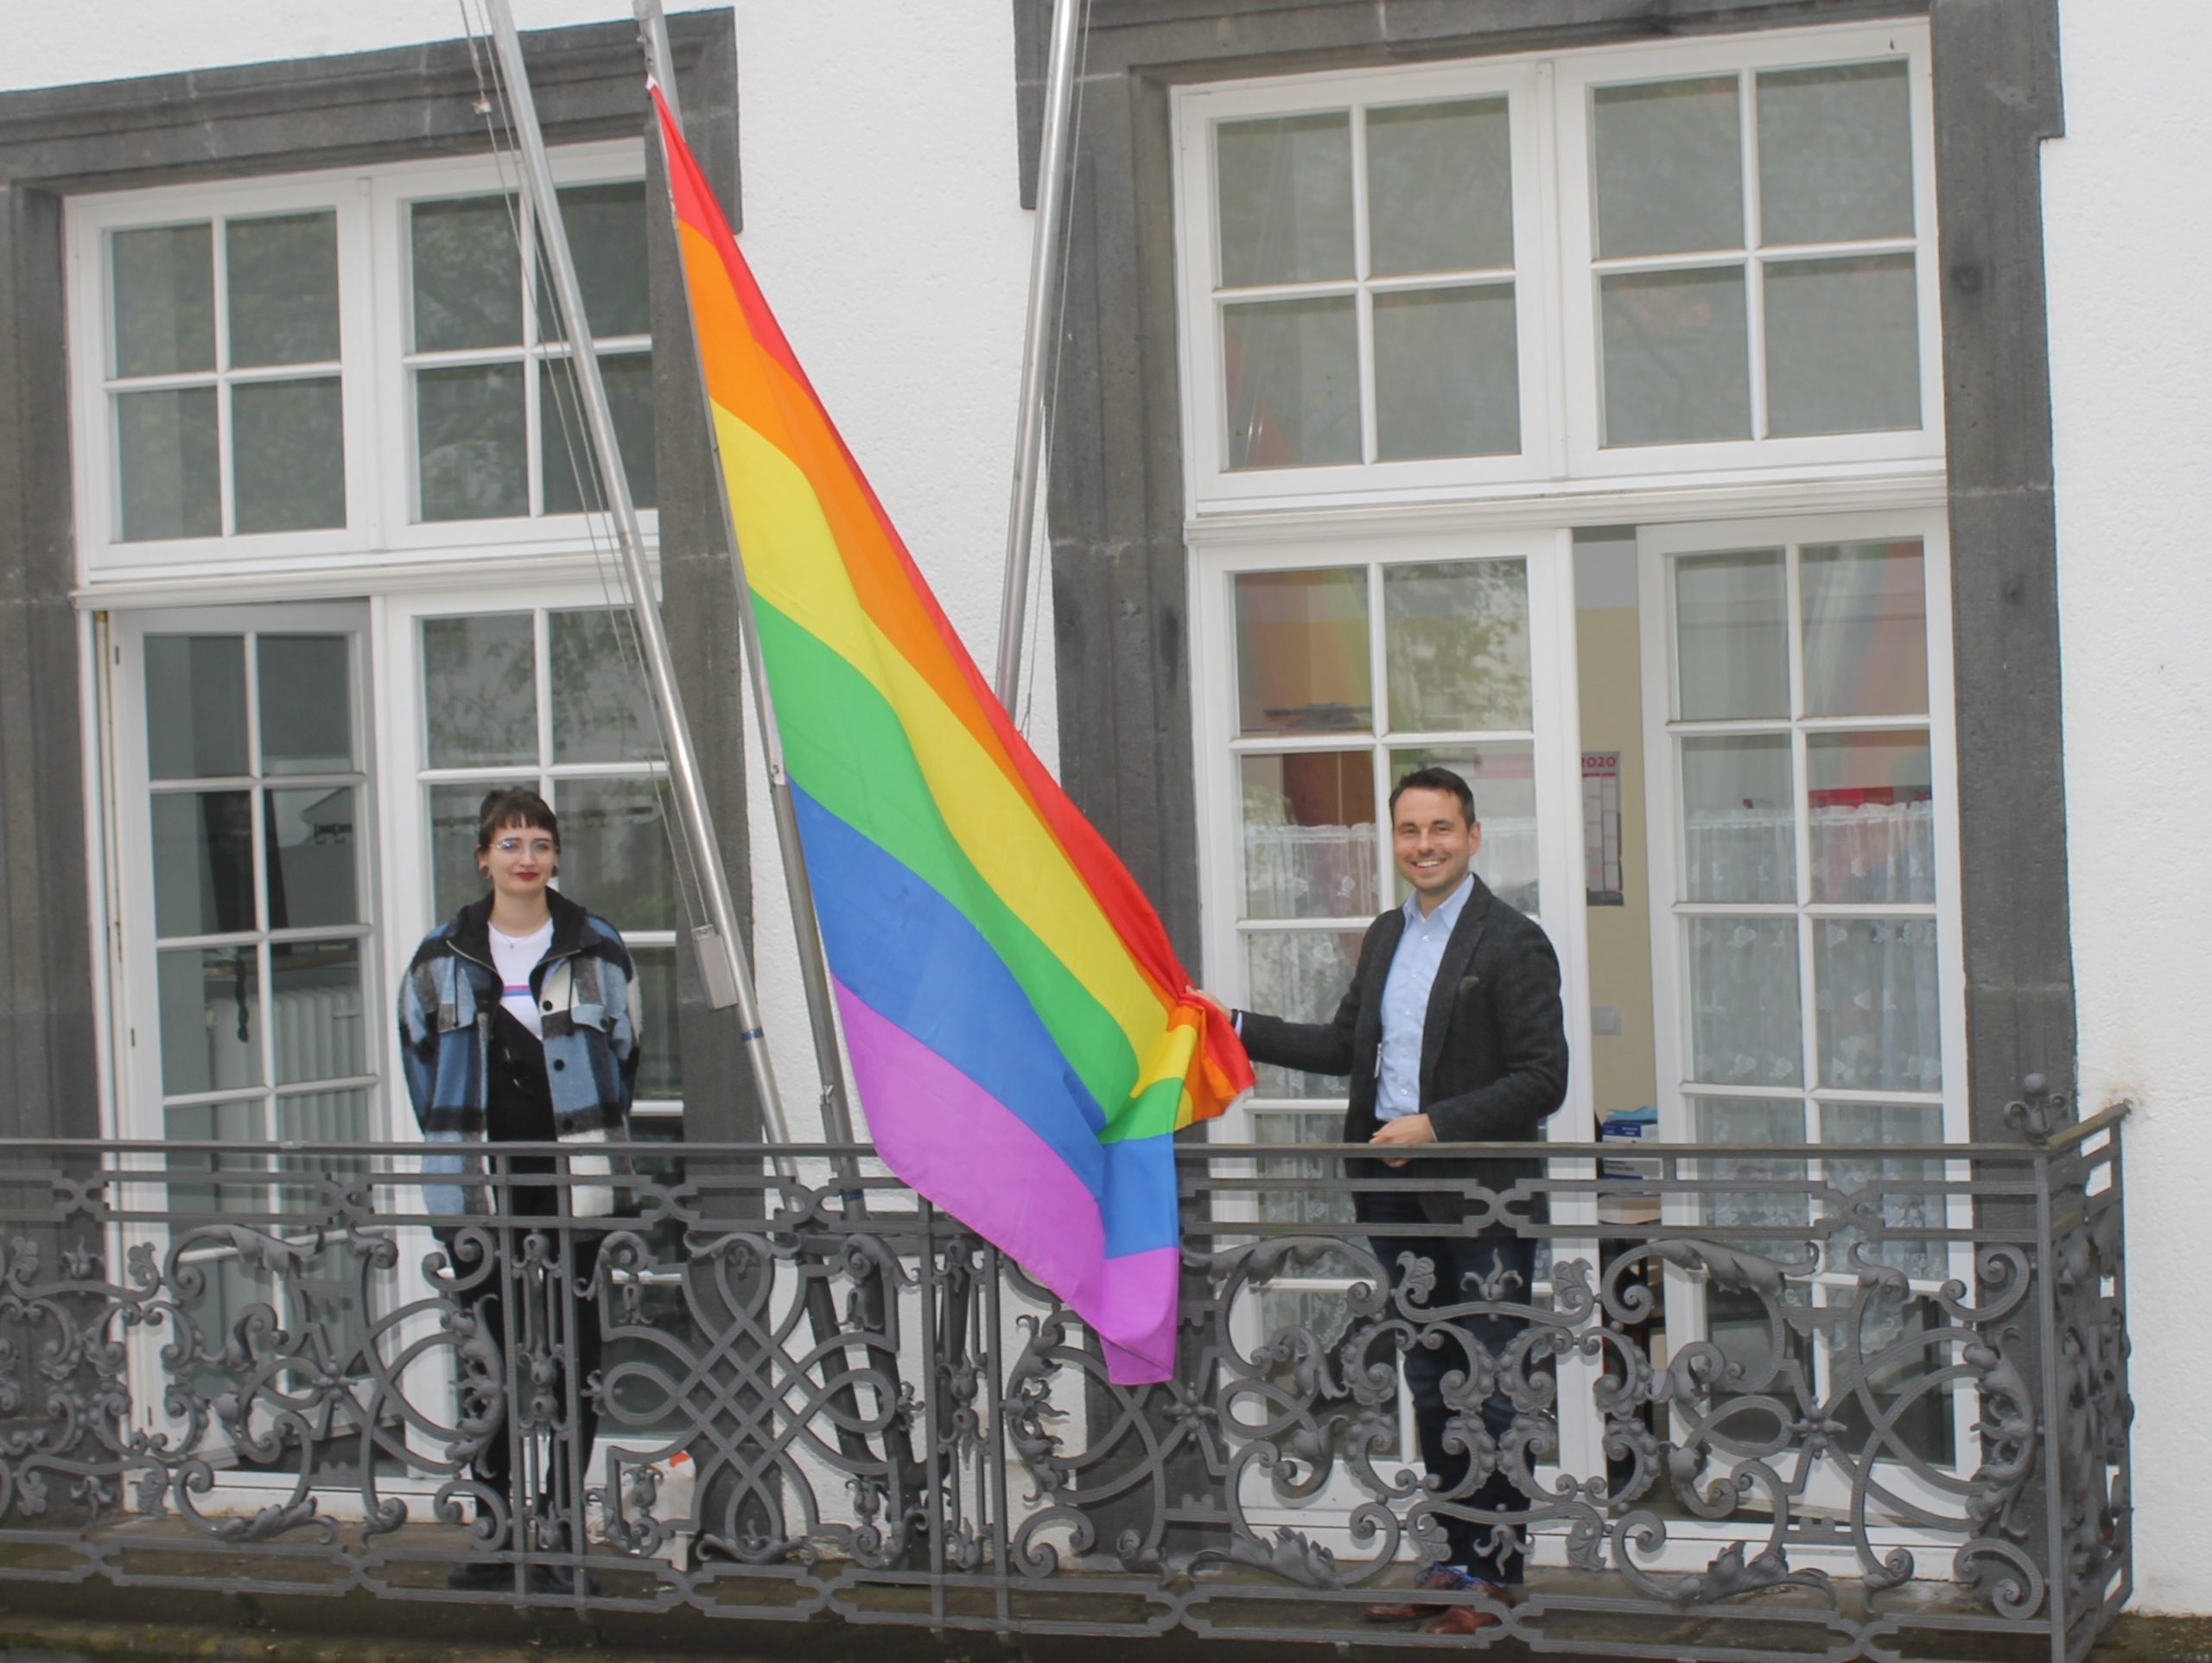 Regenbogenfahne weht über Rathauseingang